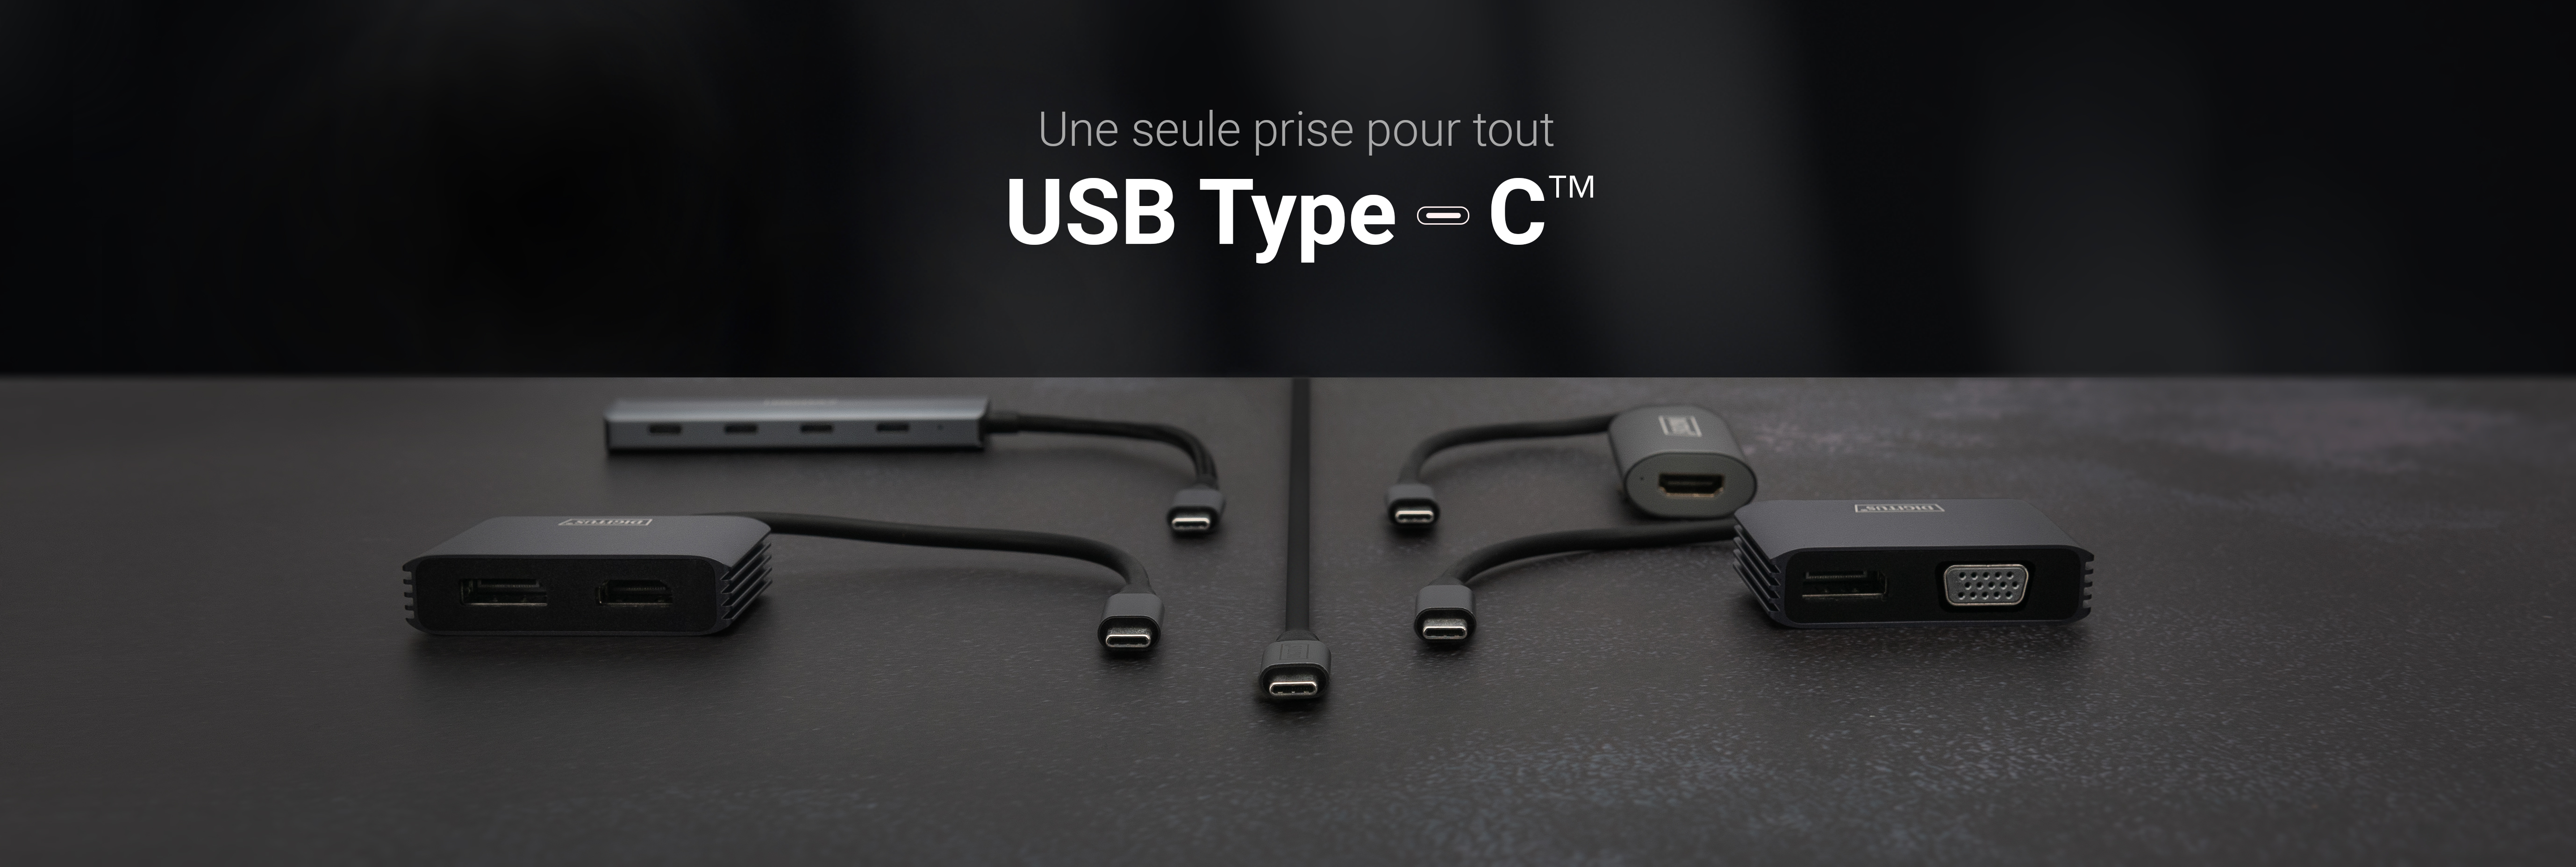 En-tête USB Type-C